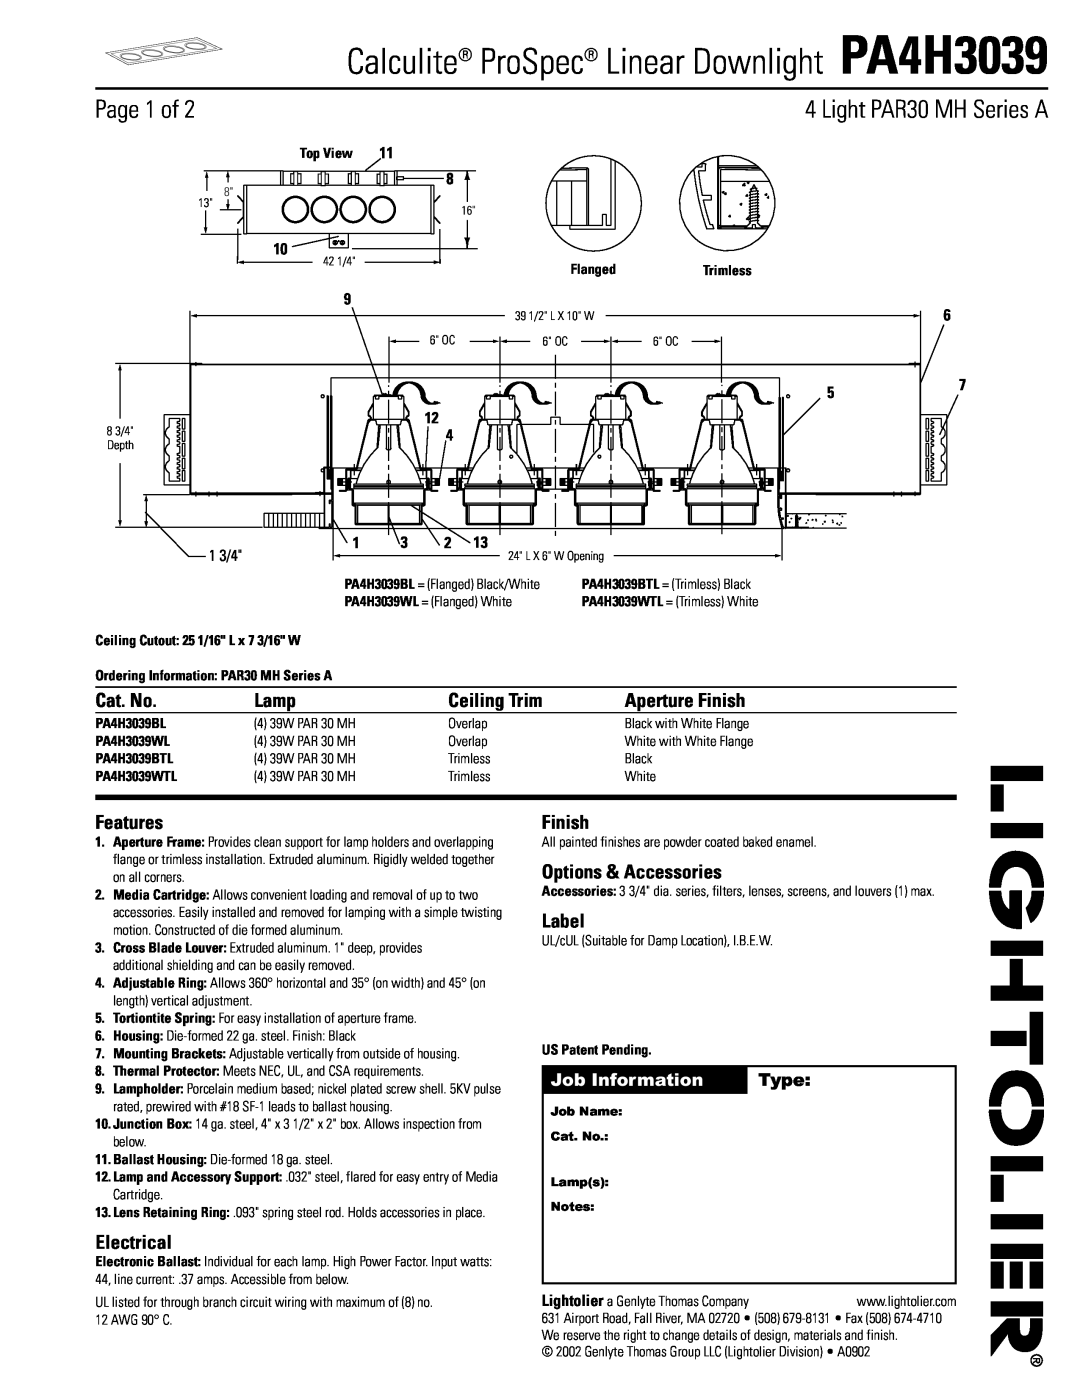 Lightolier manual Calculite ProSpec Linear Downlight PA4H3039, Page 1 of, Light PAR30 MH Series A, Cat. No, Lamp, Label 